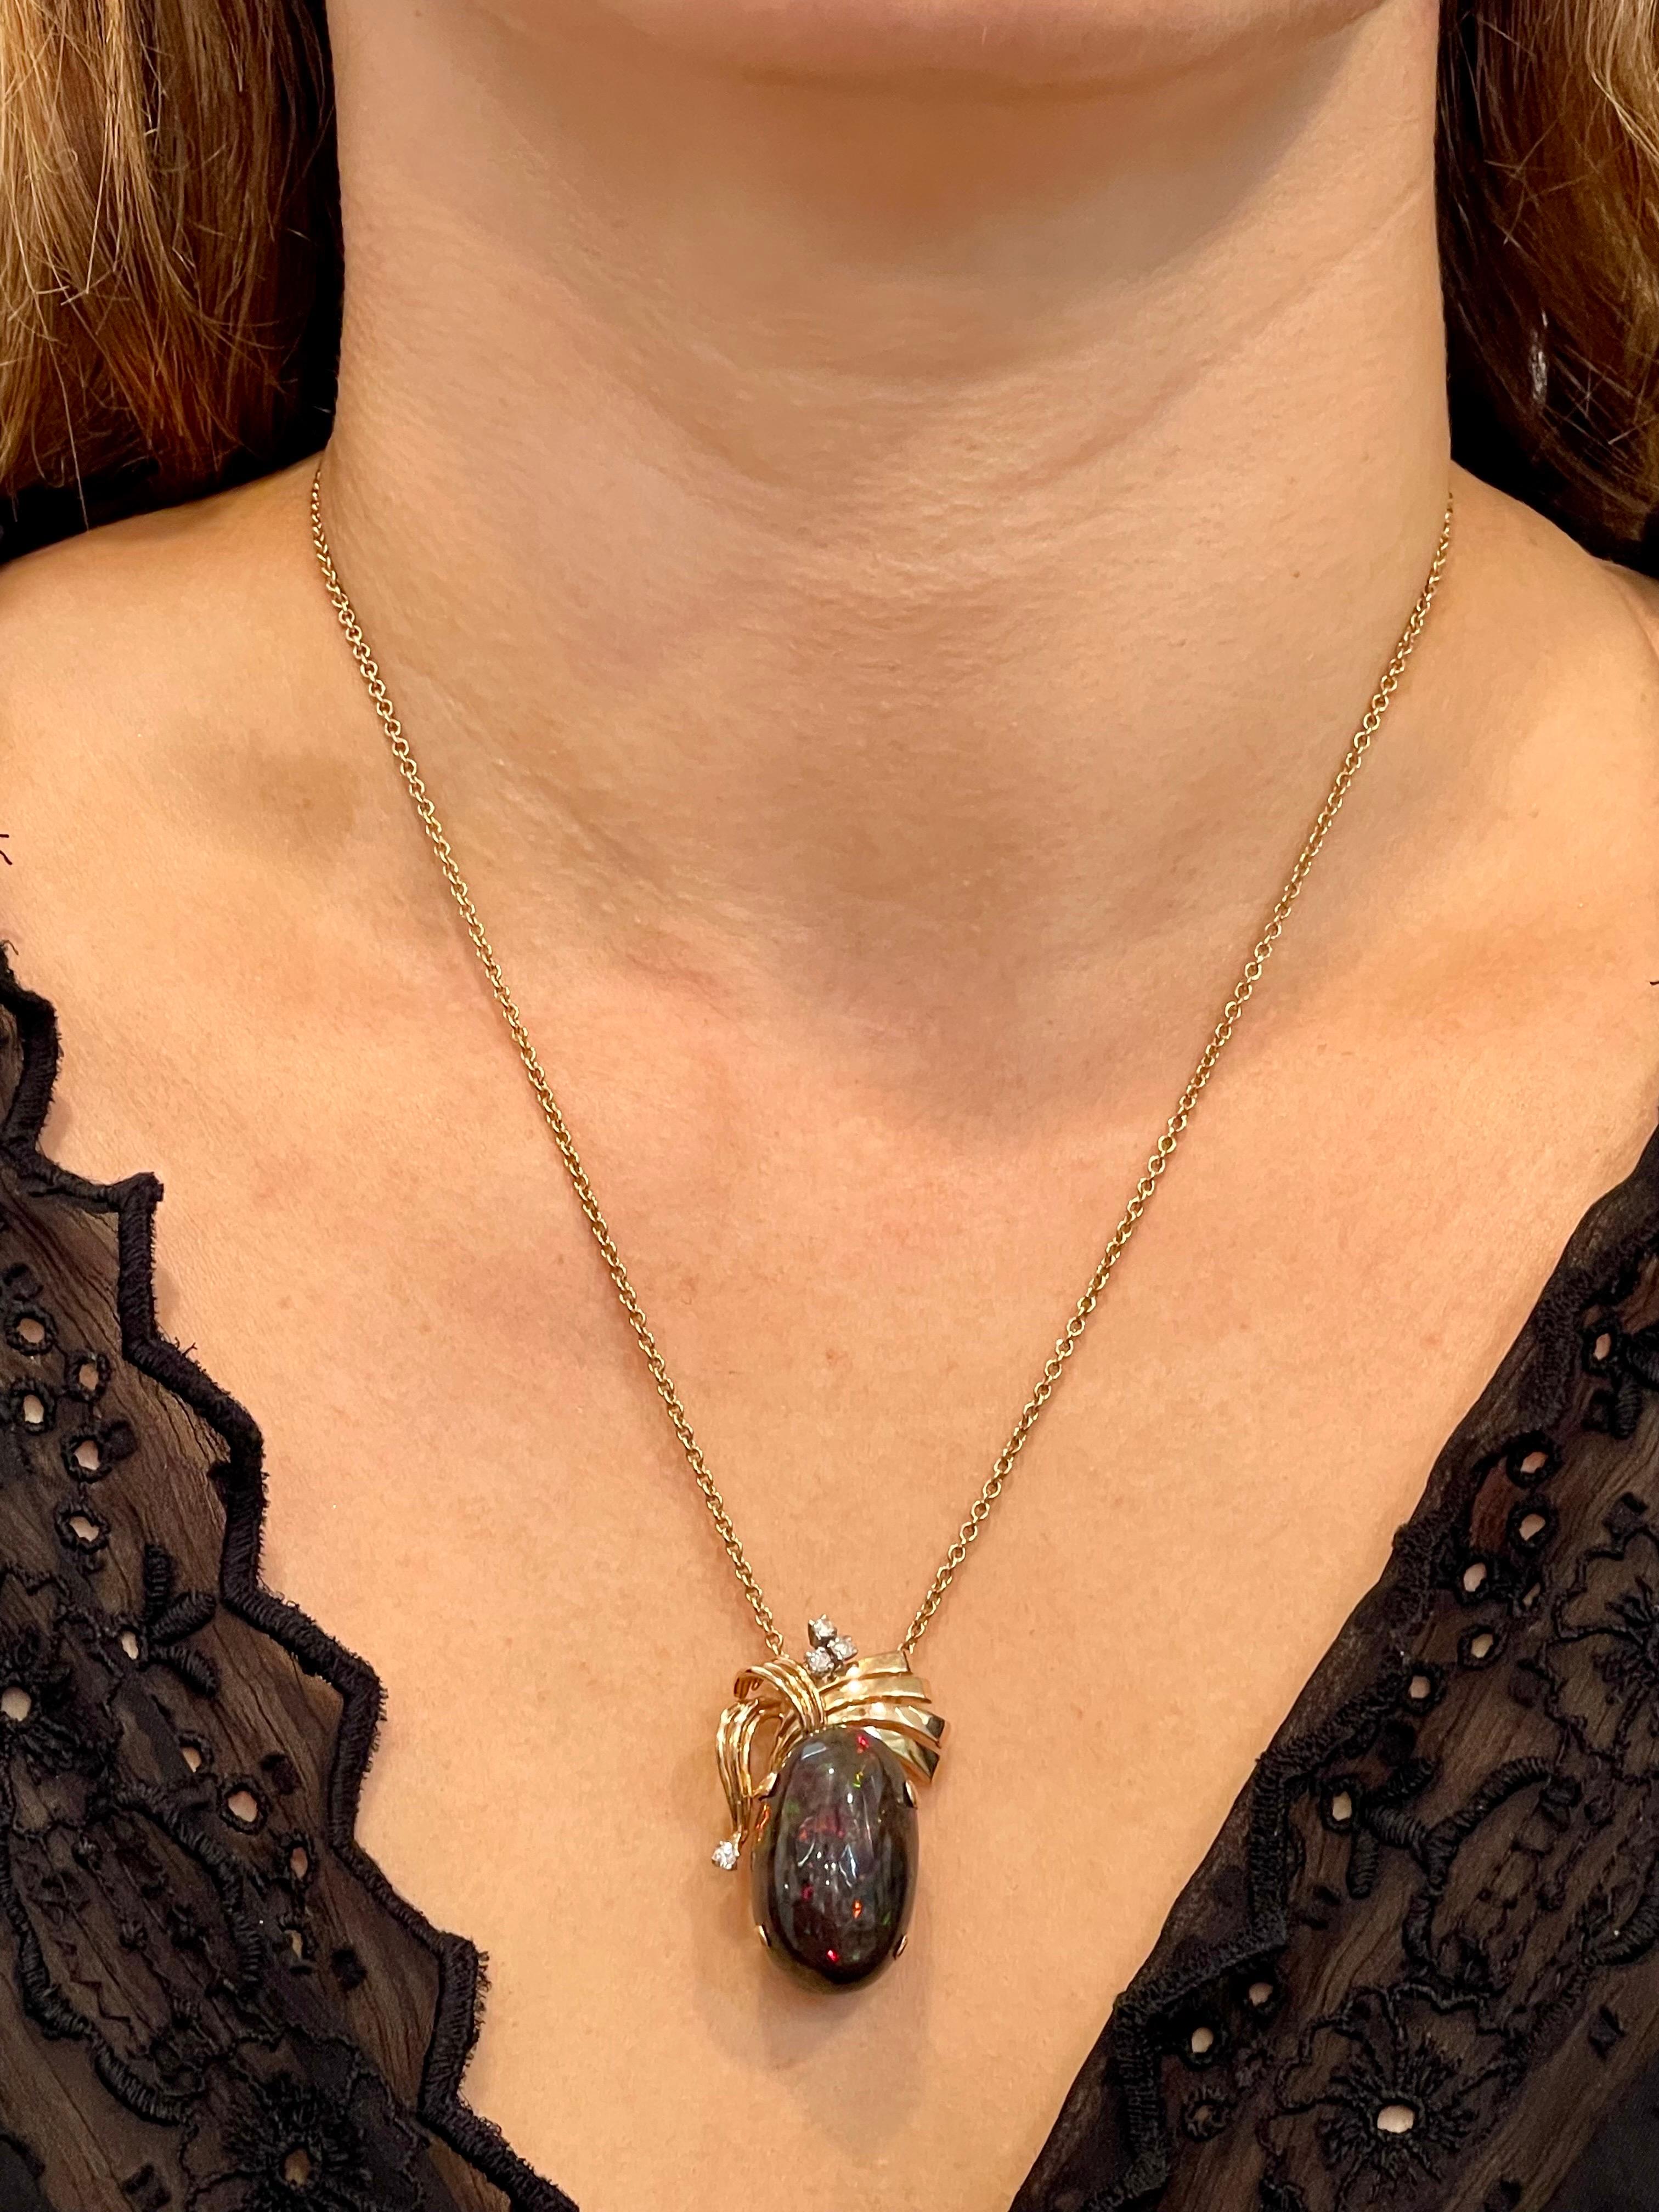 30 Carat Oval Ethiopian Black Opal Pendant/Necklace 18 Karat + 18 Kt Gold Chain For Sale 12